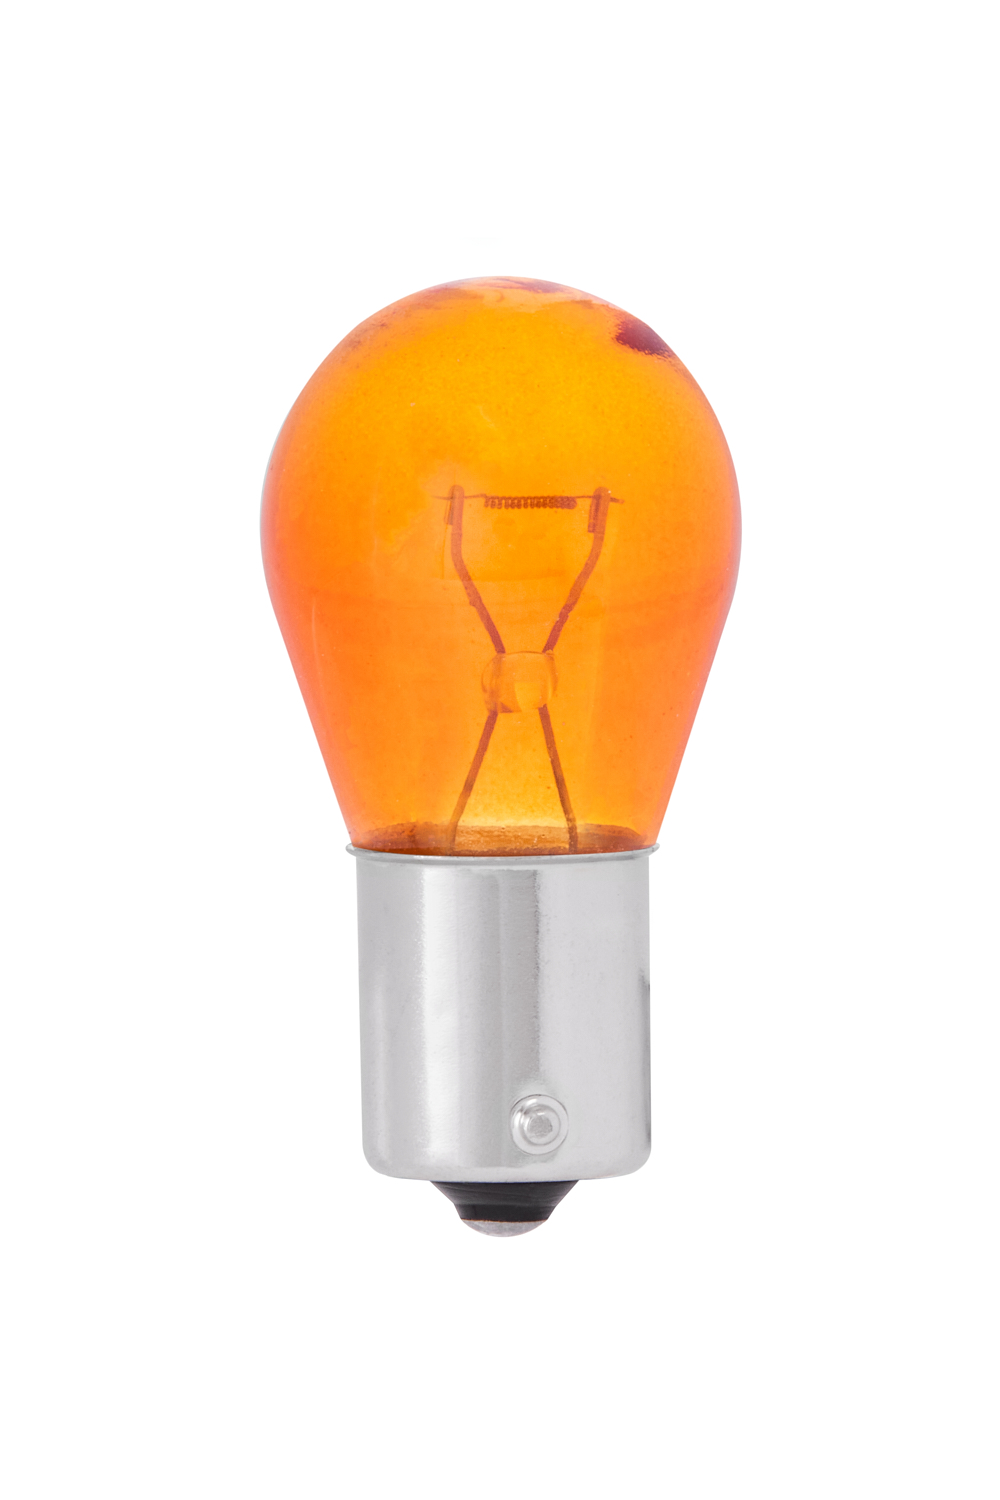 Ampoule clignotant orange simple filament 24V 21W - Schengler Industrie